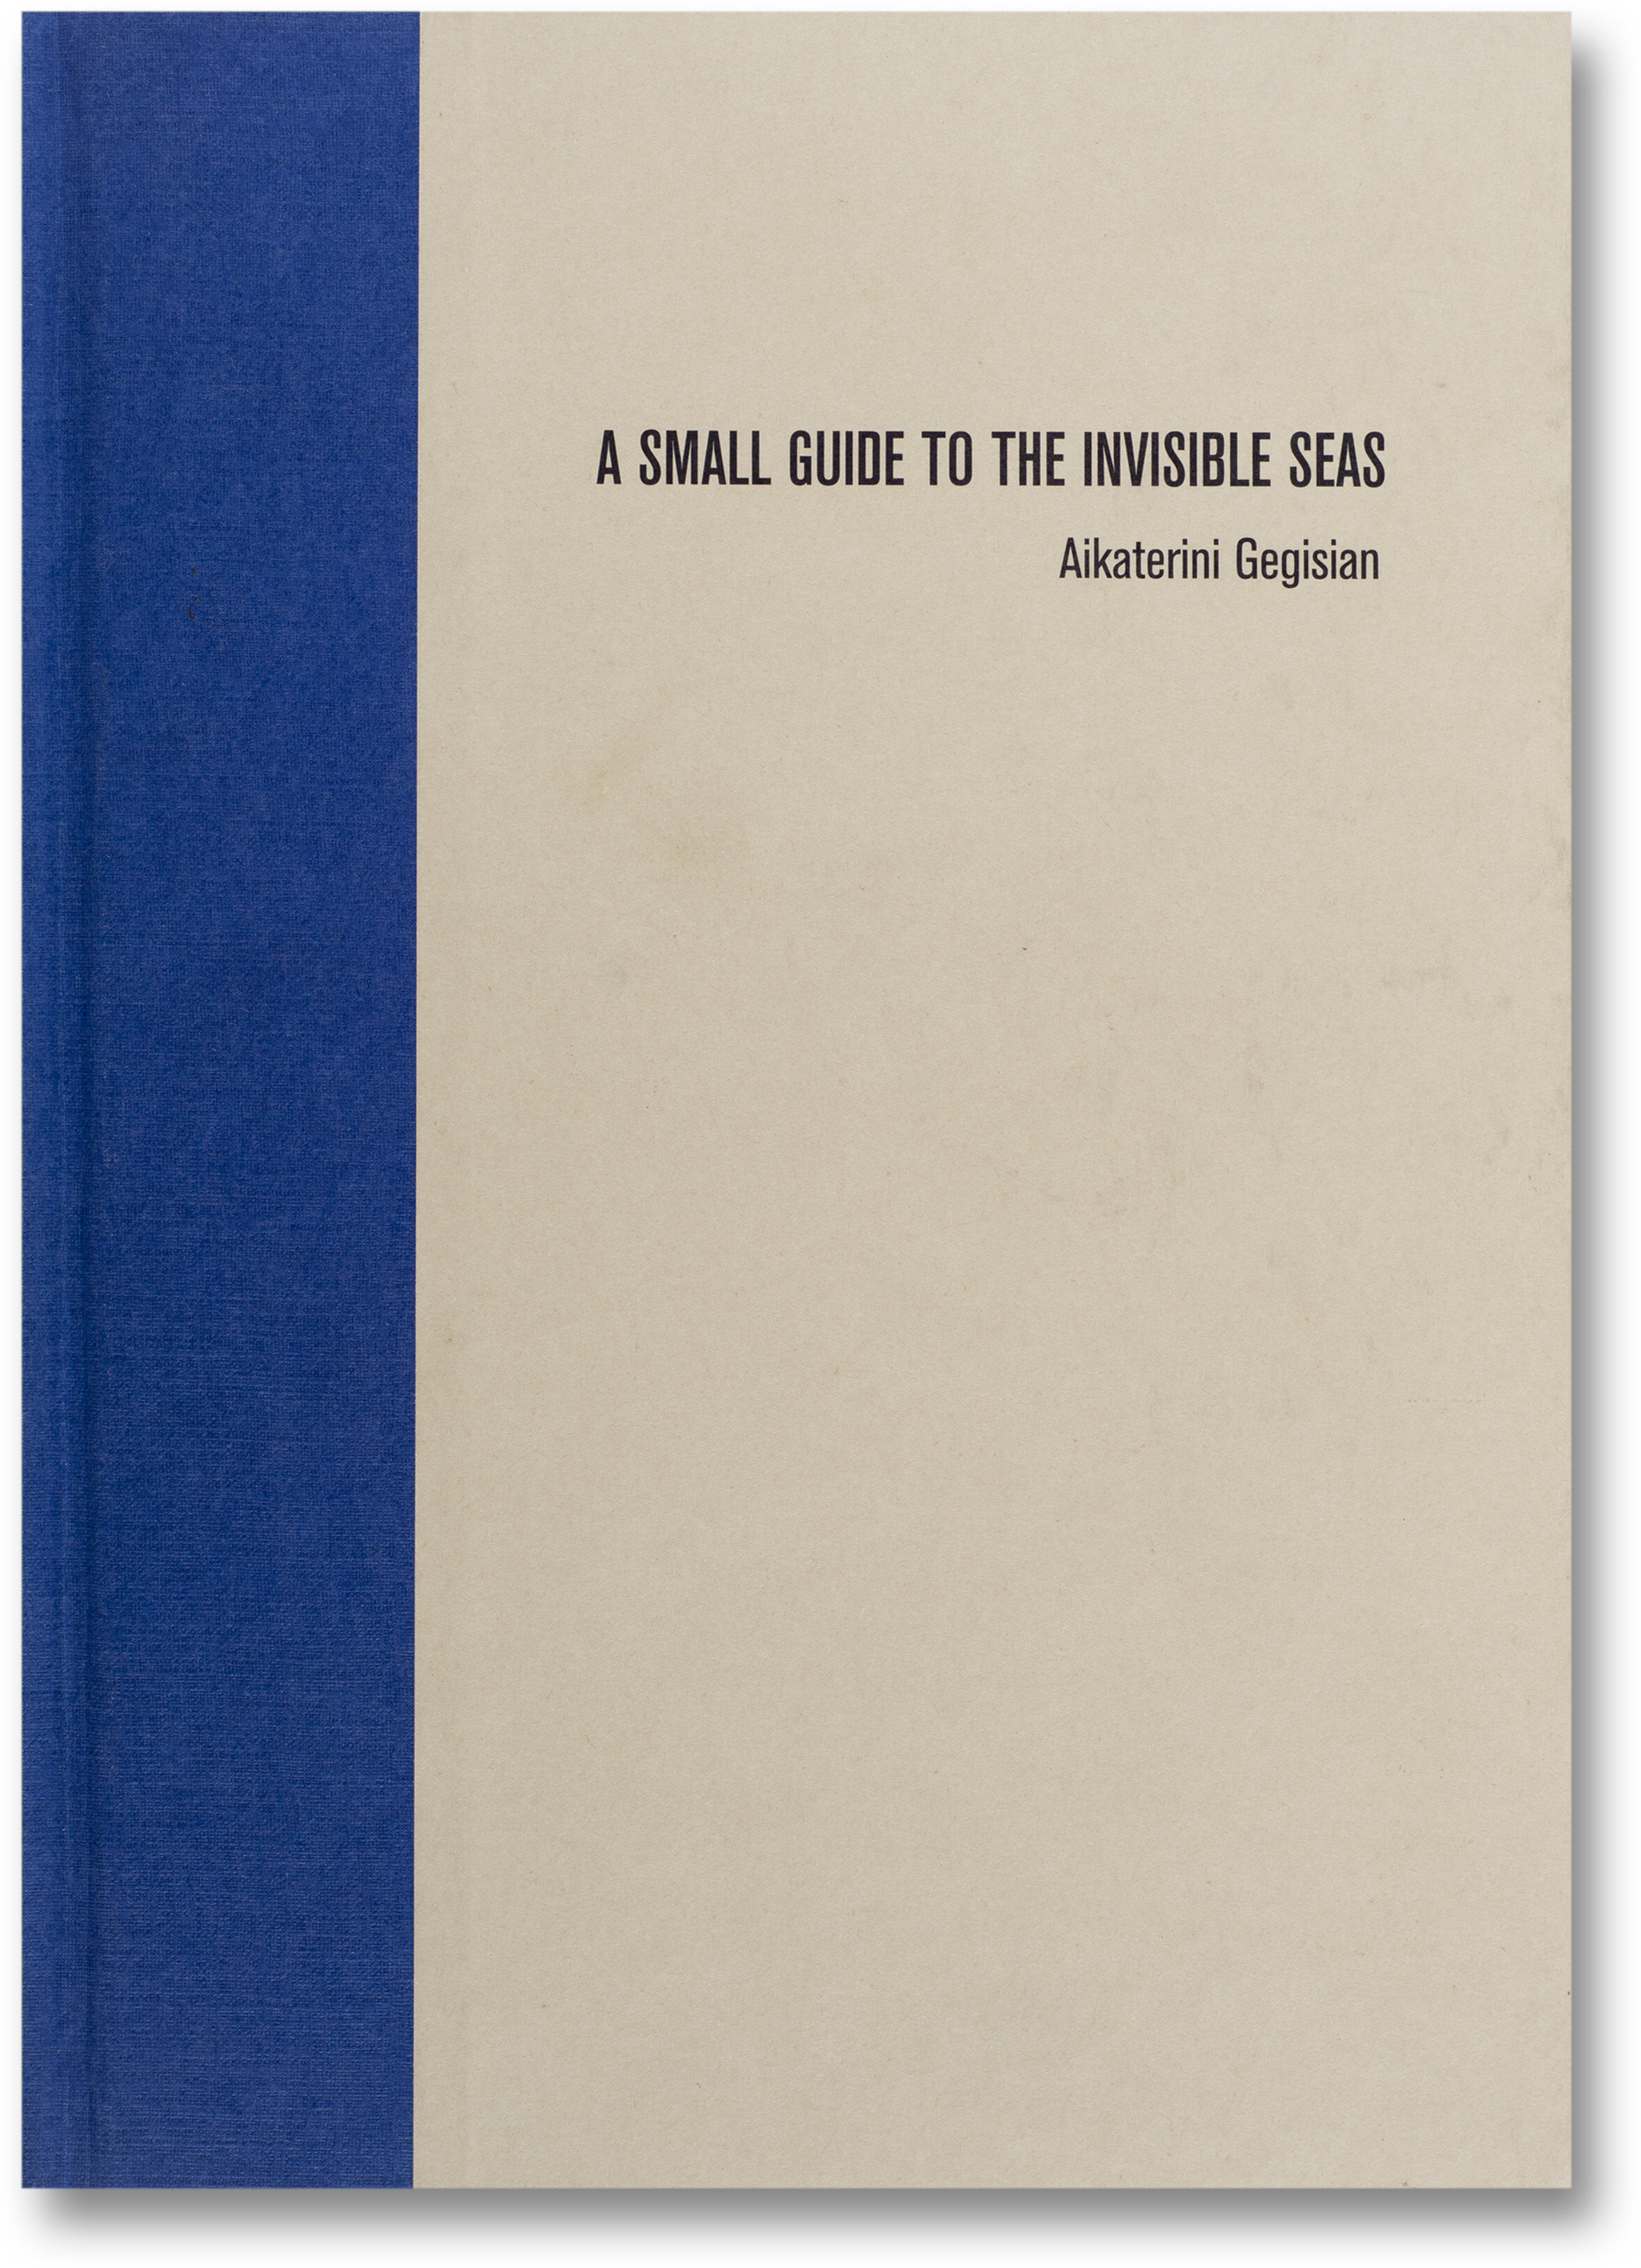 Aikaterini Gegisian, A Small Guide to the Invisible Seas